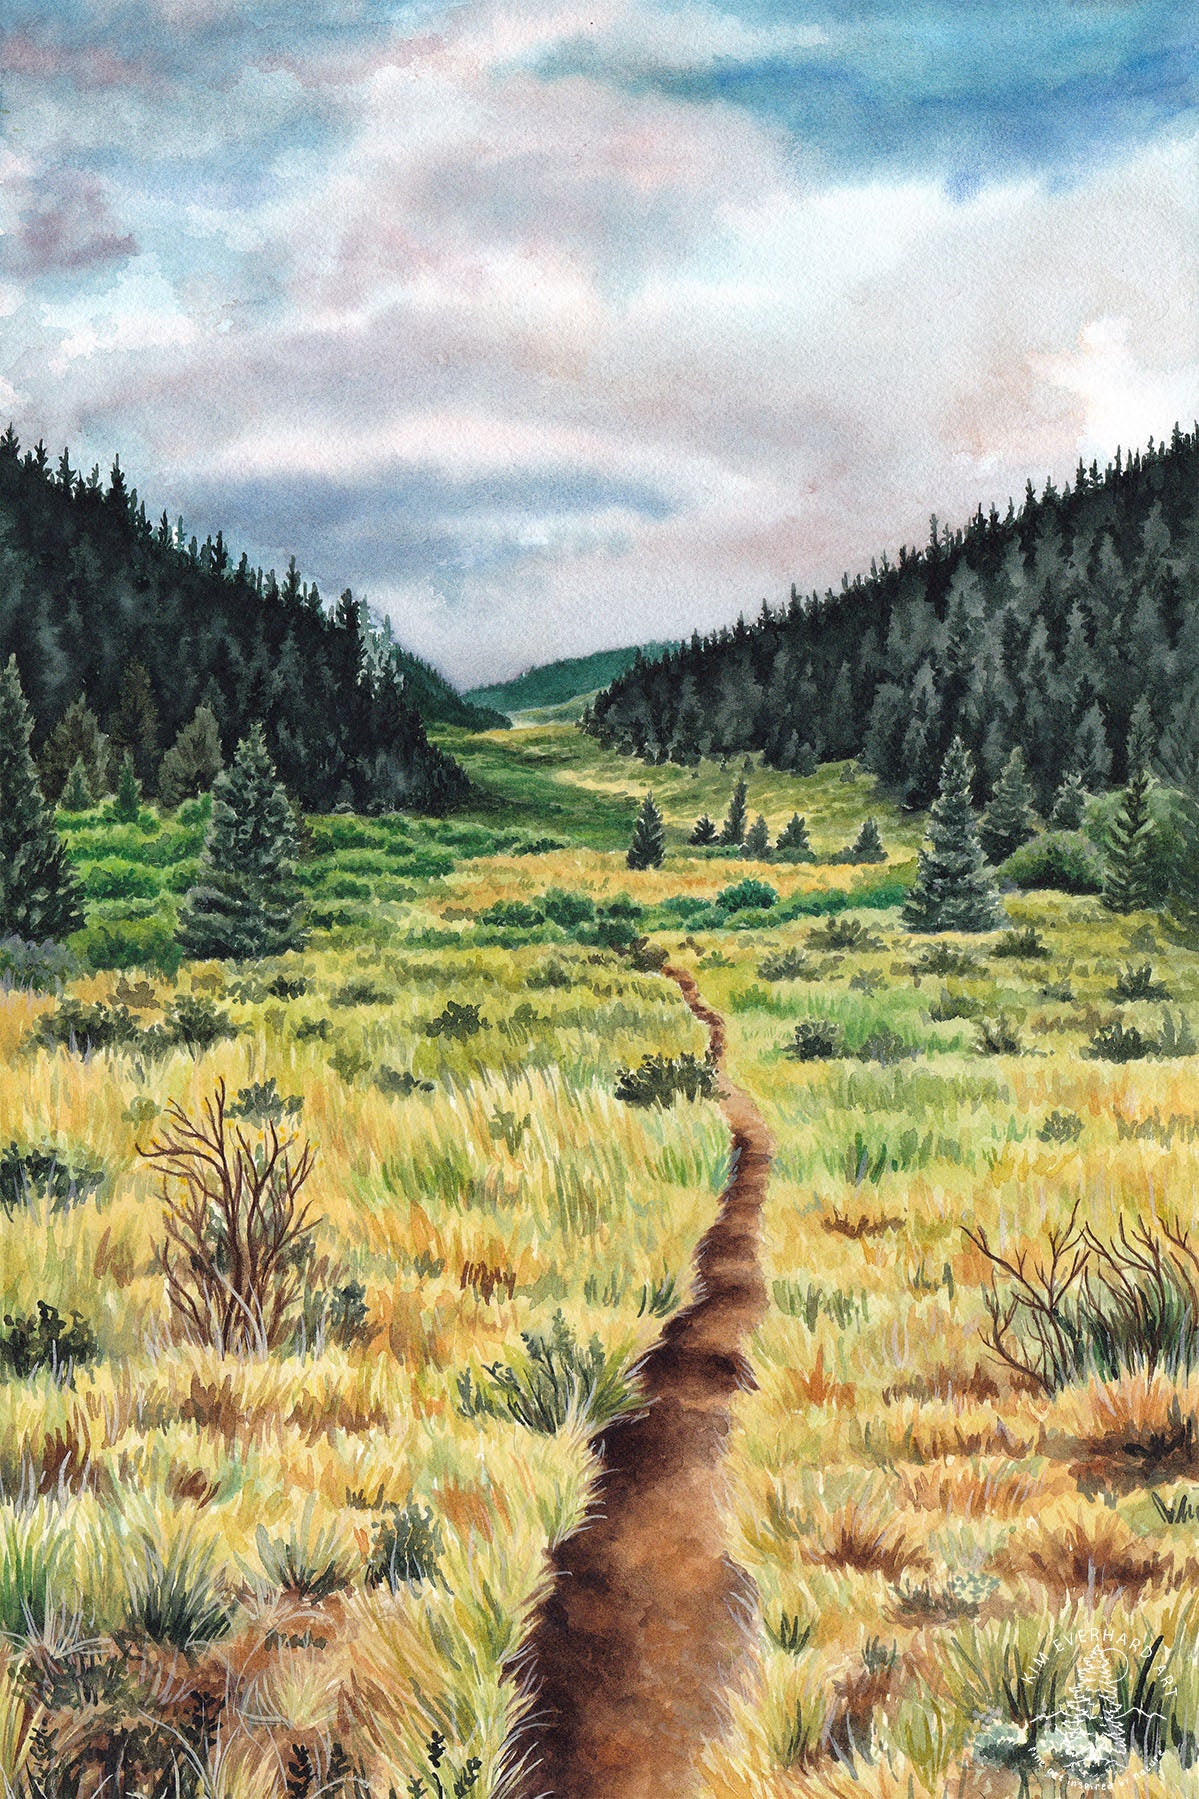 The Colorado Trail - Original Painting - 11x14" - Kim Everhard Art